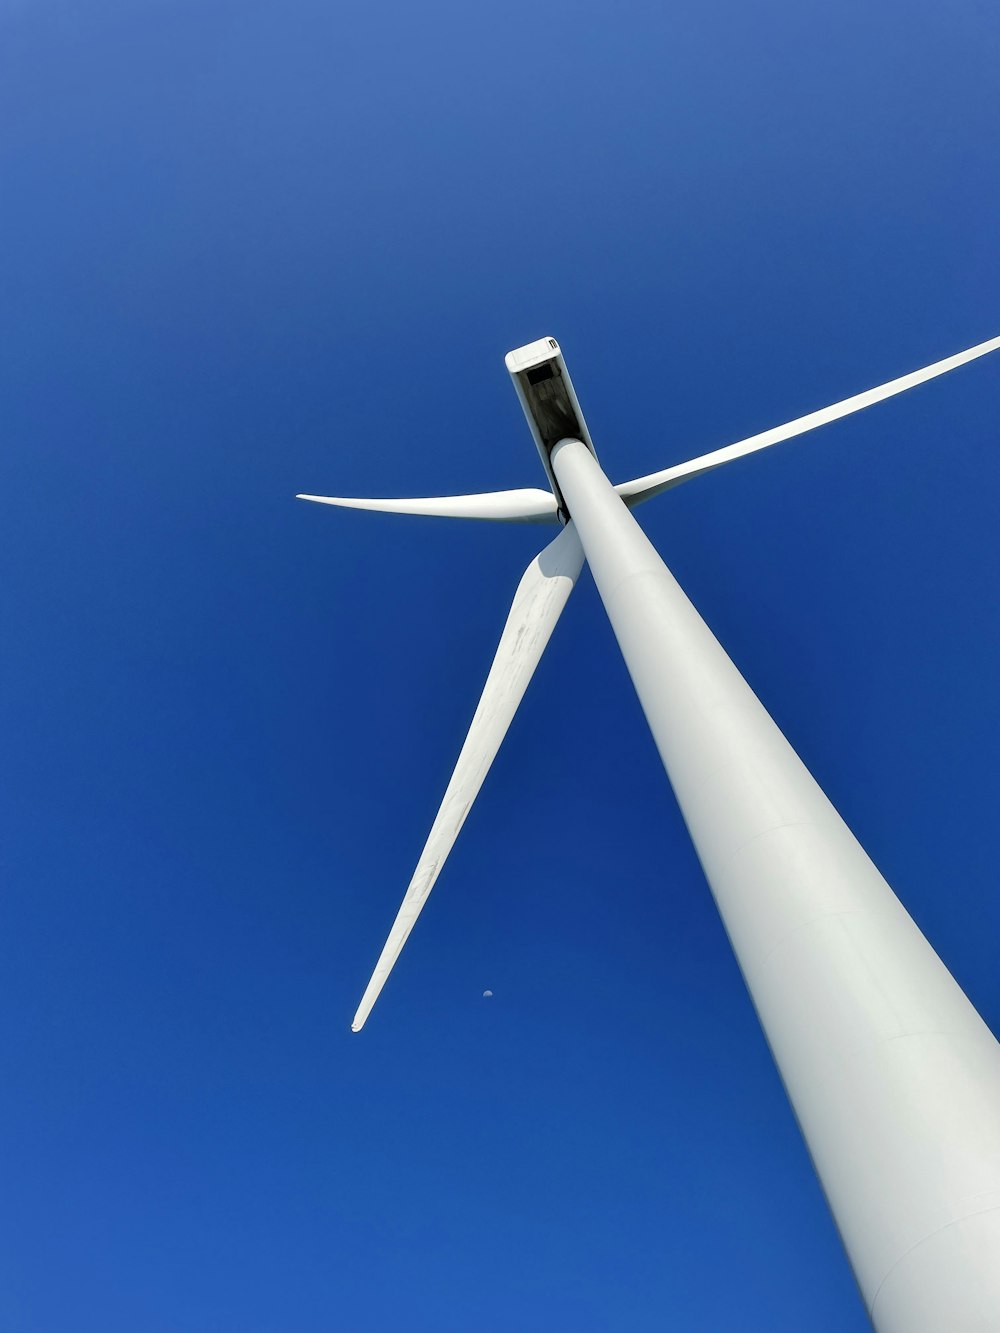 a close up of a wind turbine against a blue sky